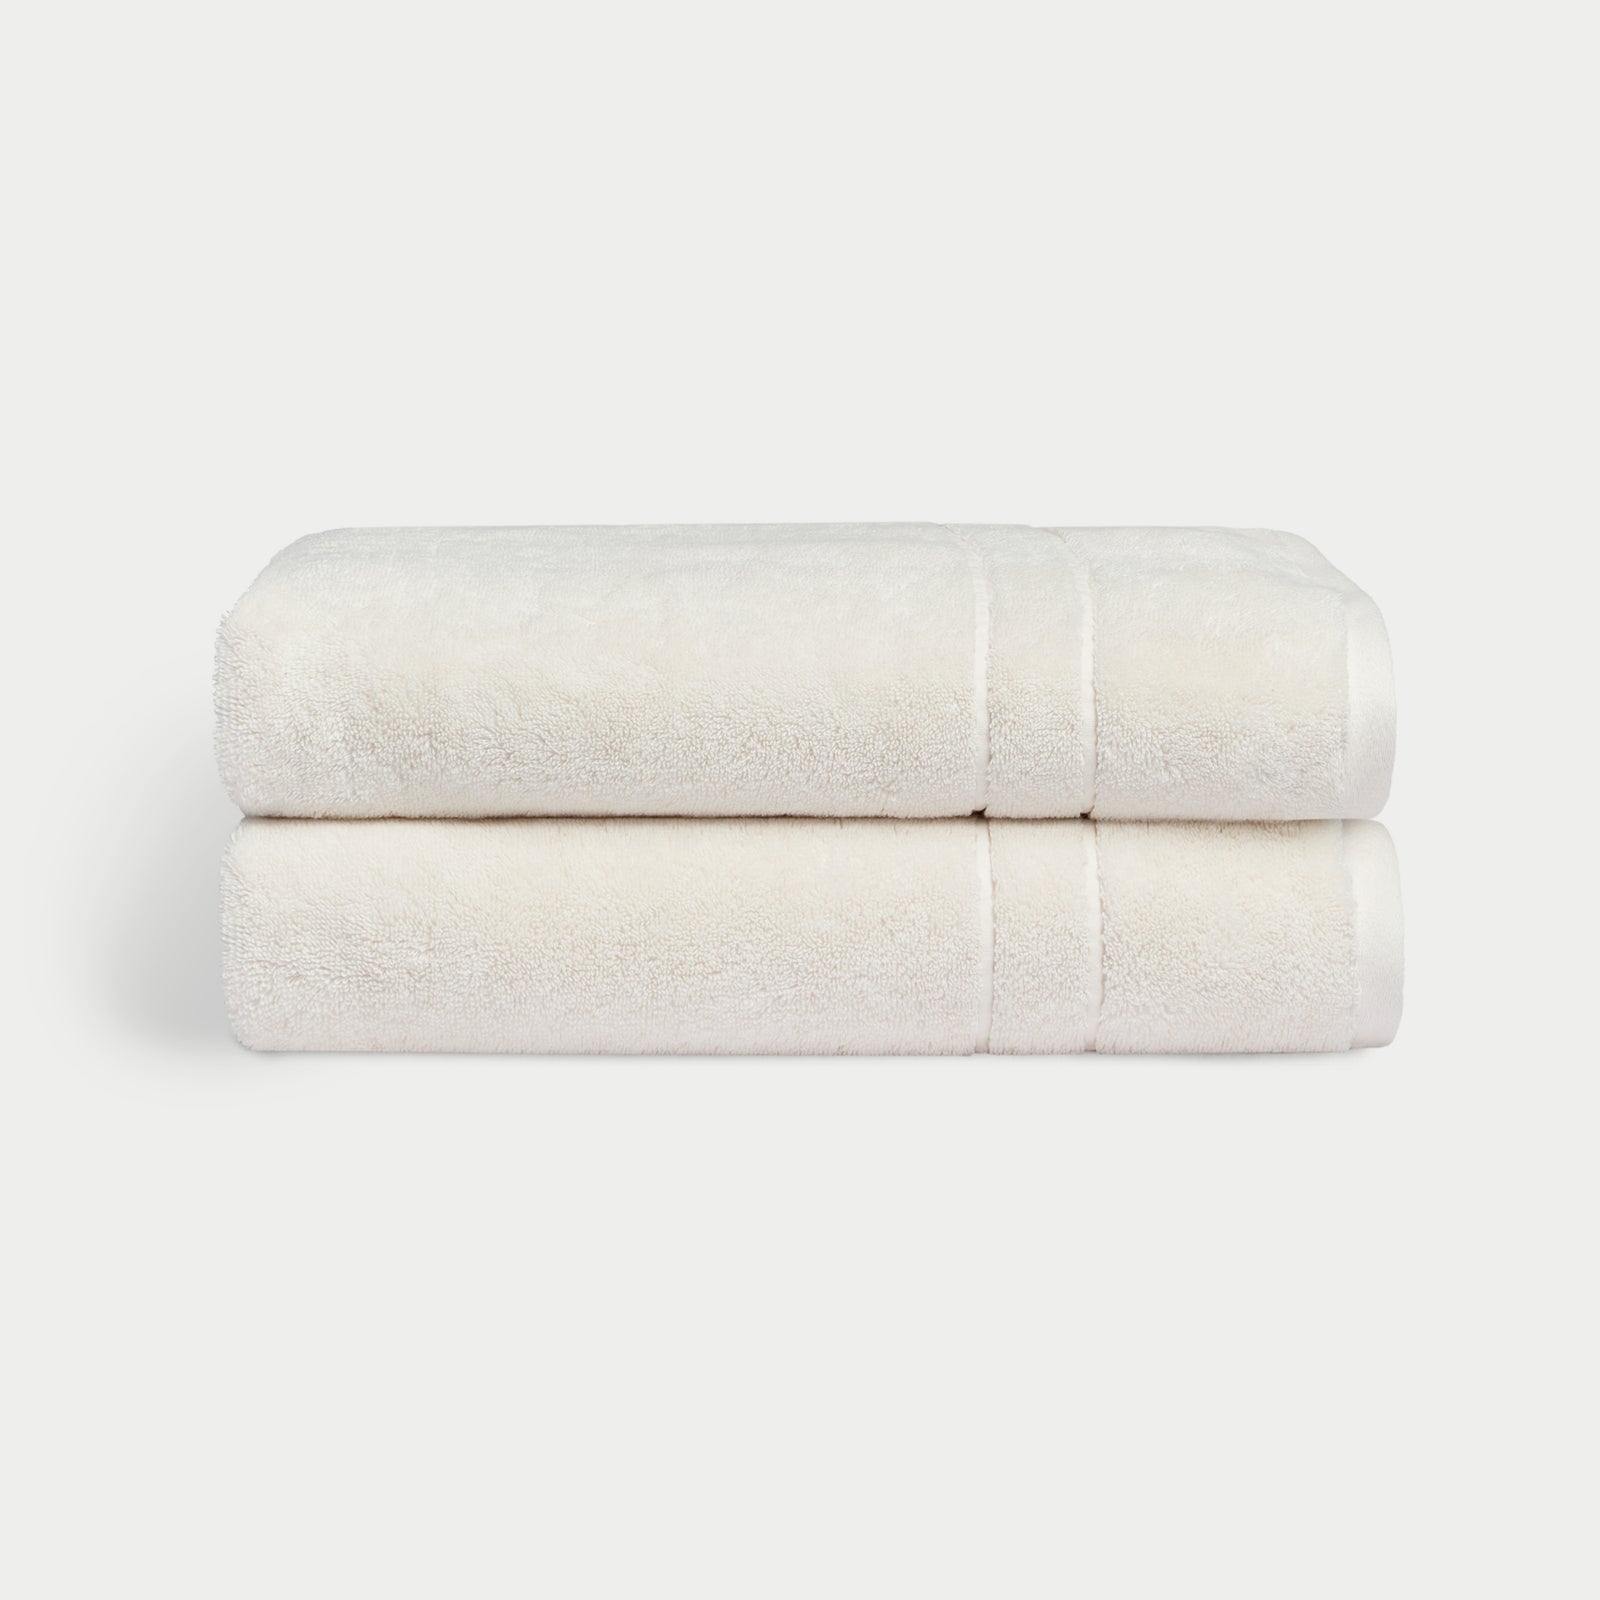 Premium Plush Bath Towels in the color Seashell. Photo of Complete Premium Plush Bath Bundle taken with white background 